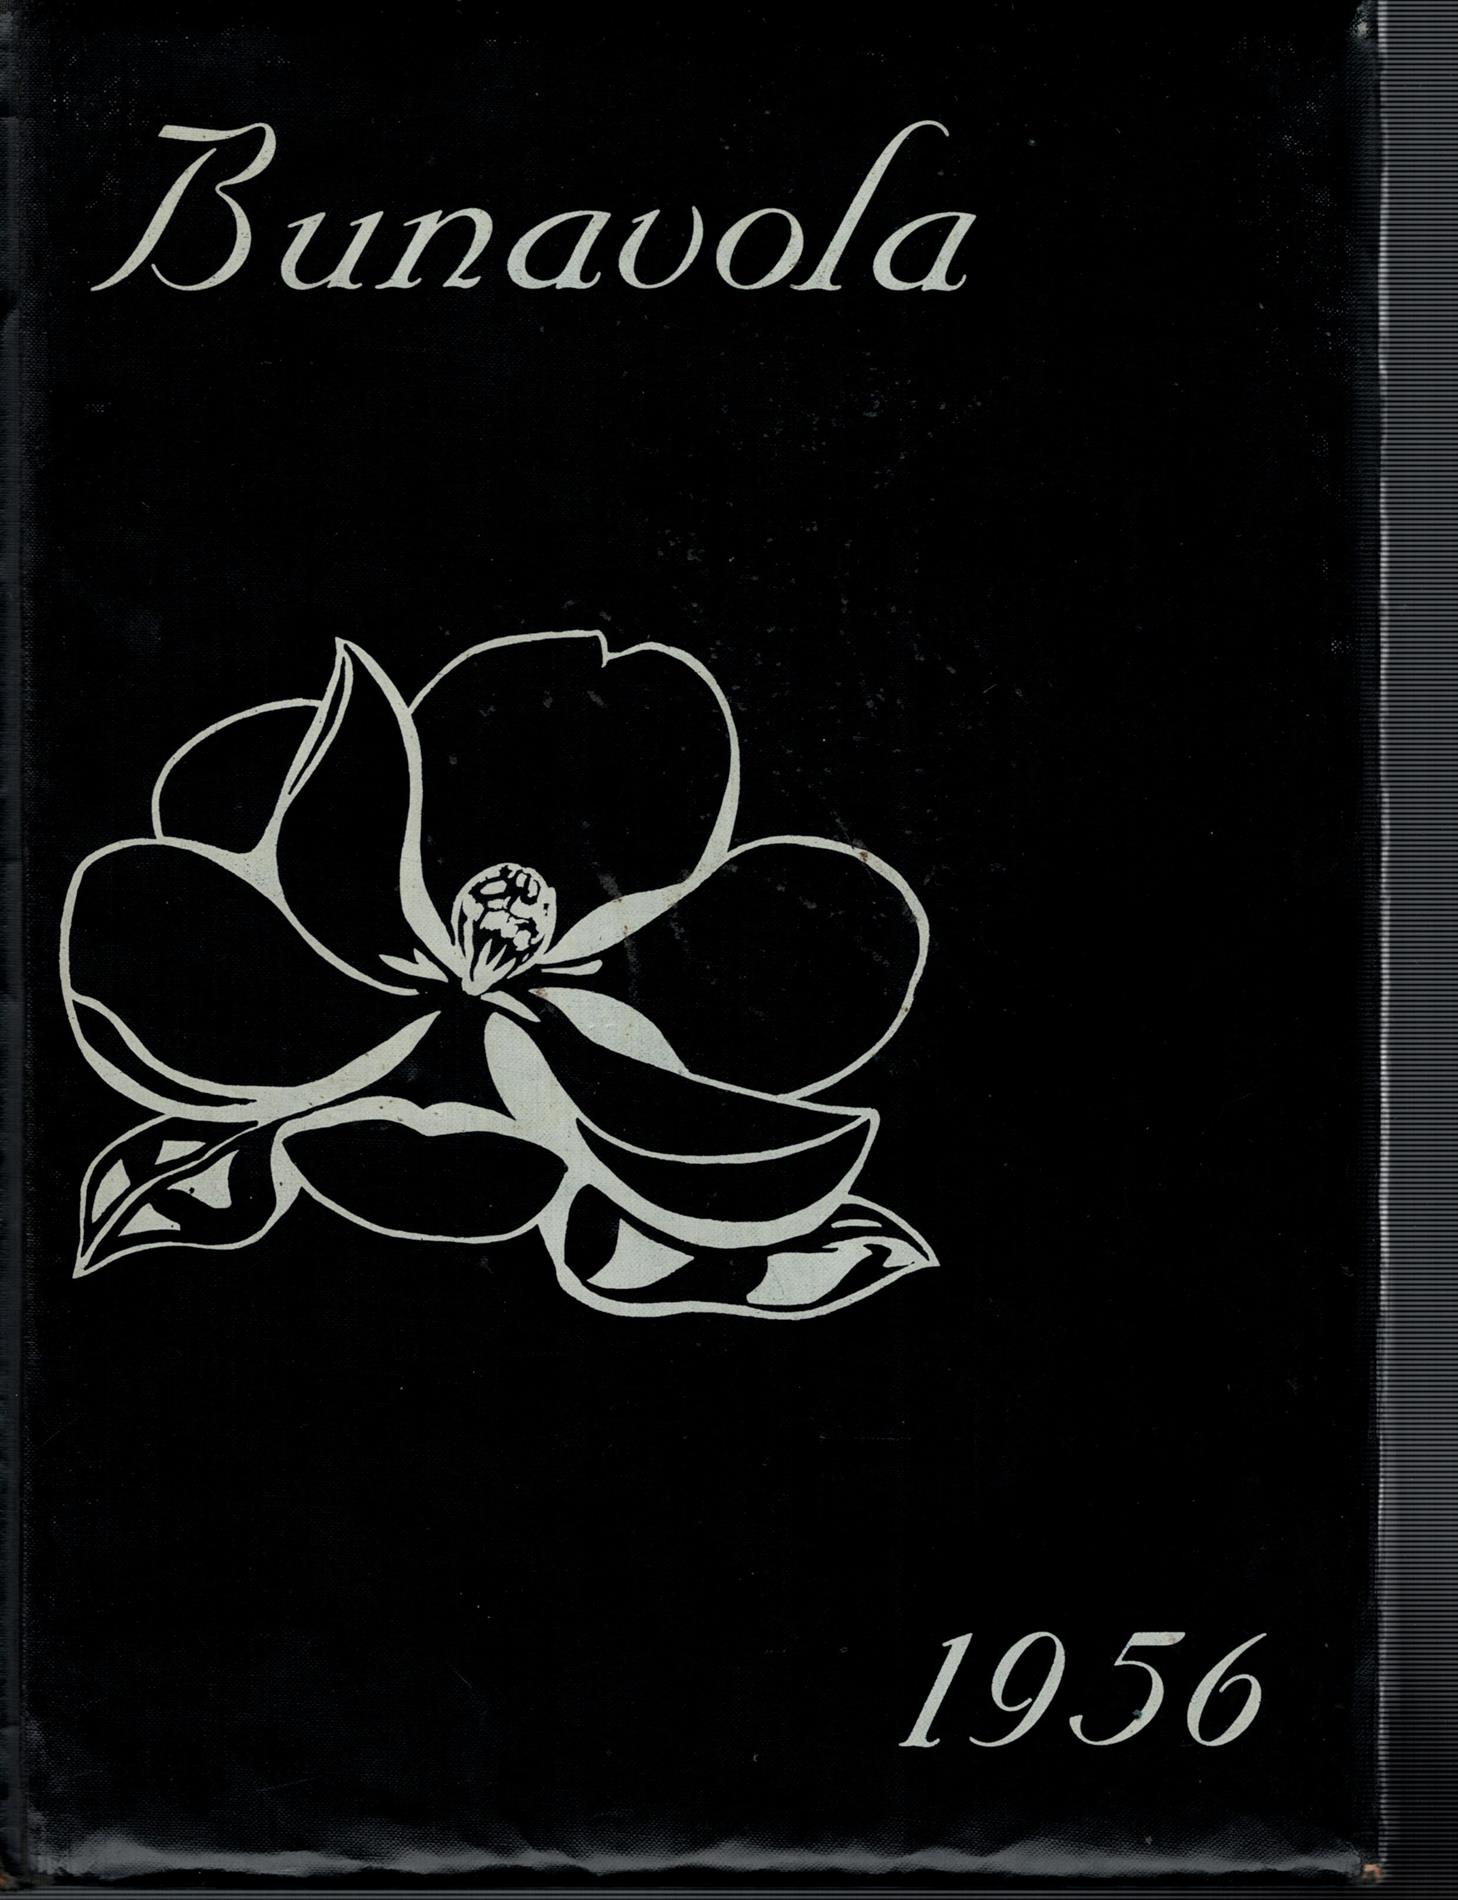 1956 Bunavola